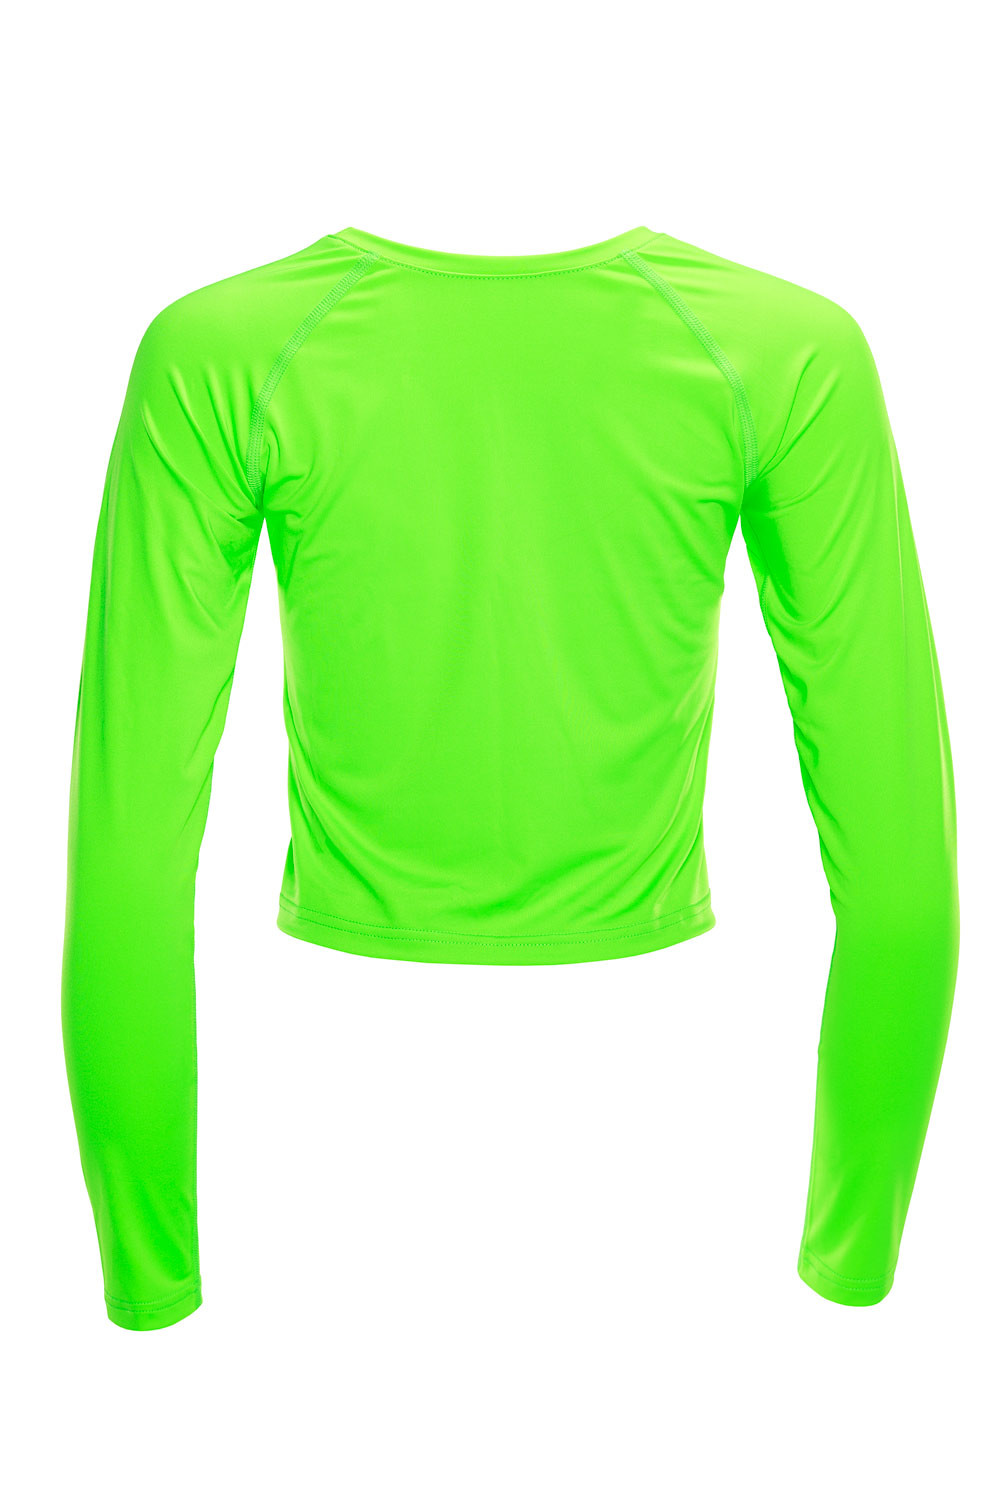 Functional Light grün, Cropped Top Winshape Style AET116, Long neon Sleeve Slim